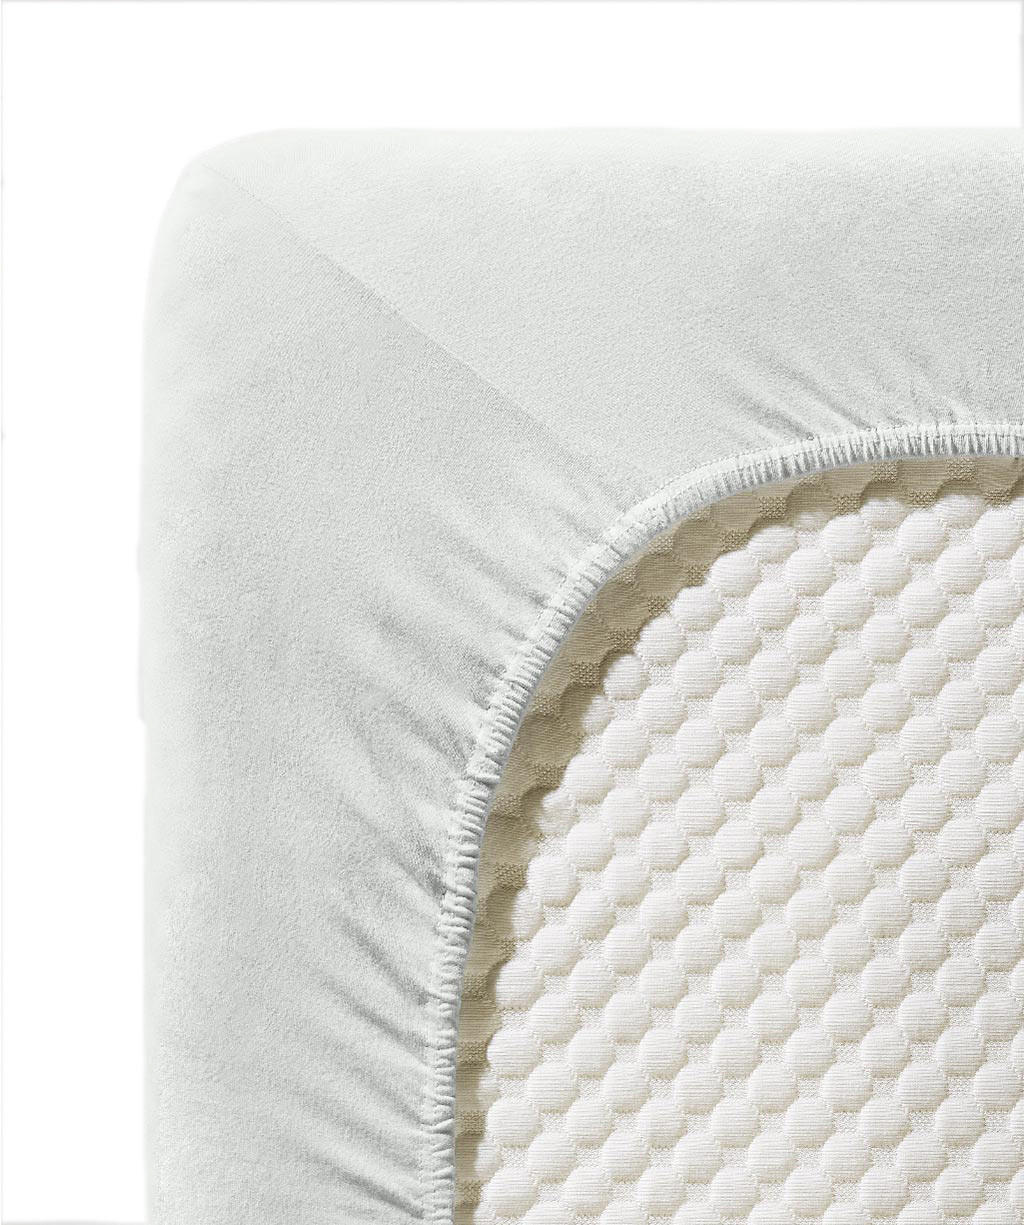 SPANNBETTTUCH Jenny C Single-Jersey  - Weiß, Basics, Textil (70/140cm) - Fleuresse